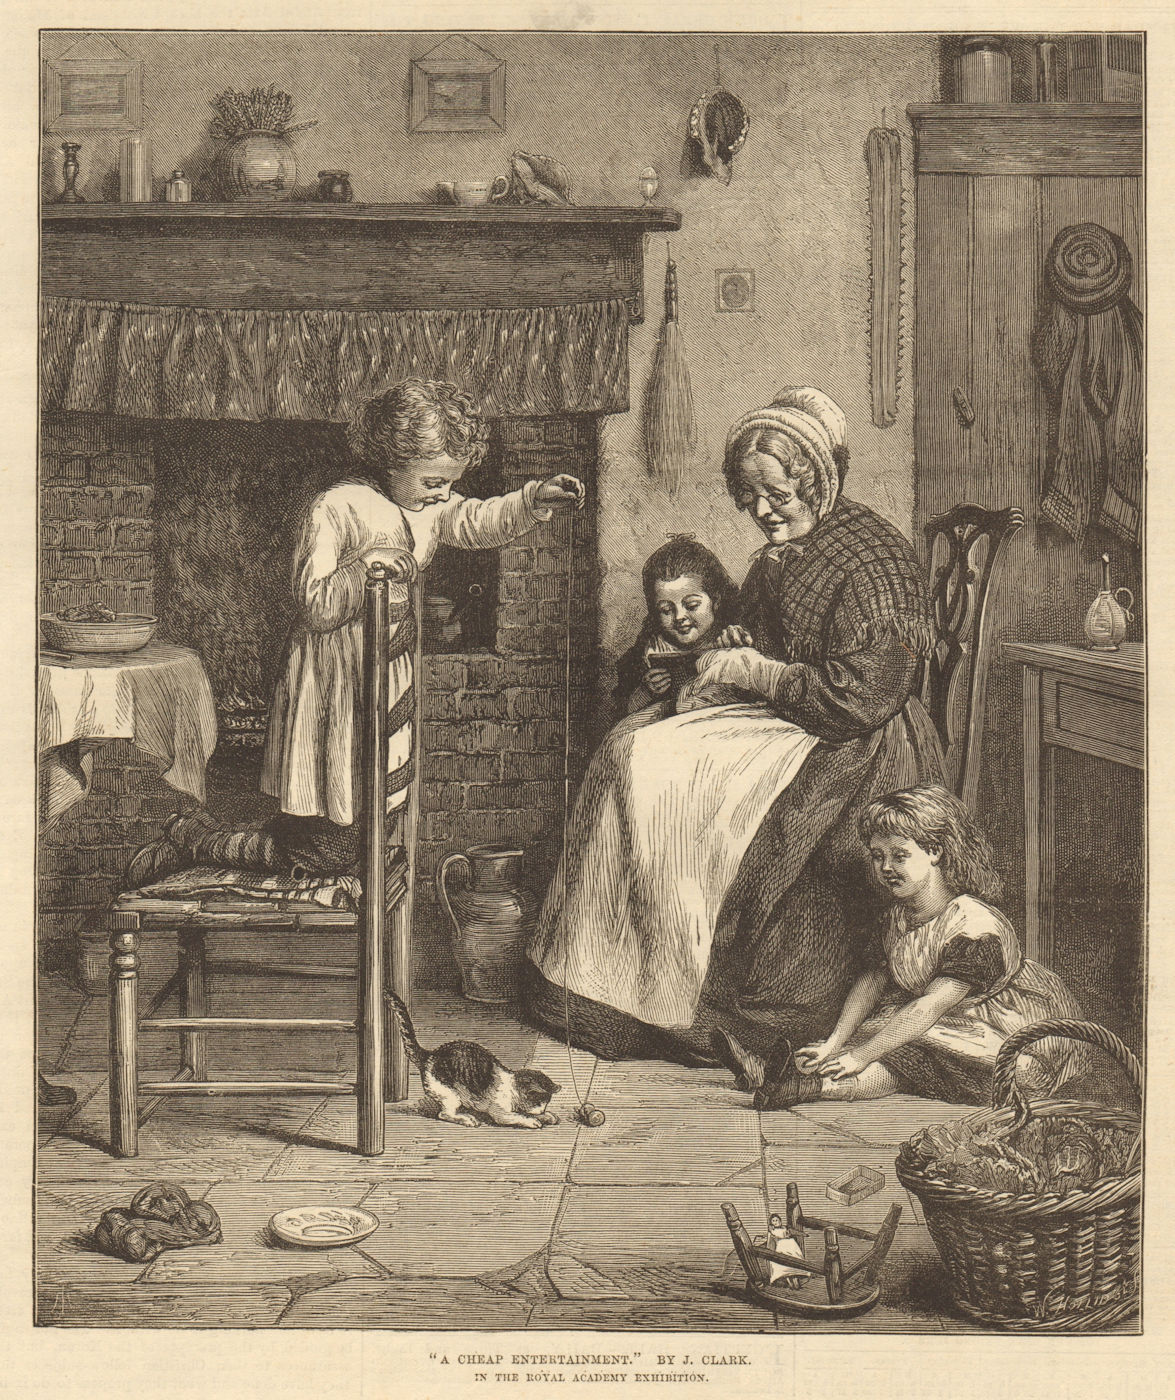 Associate Product "A cheap entertainment", by J. Clark. Family. Cats Kitten & thread 1876 print